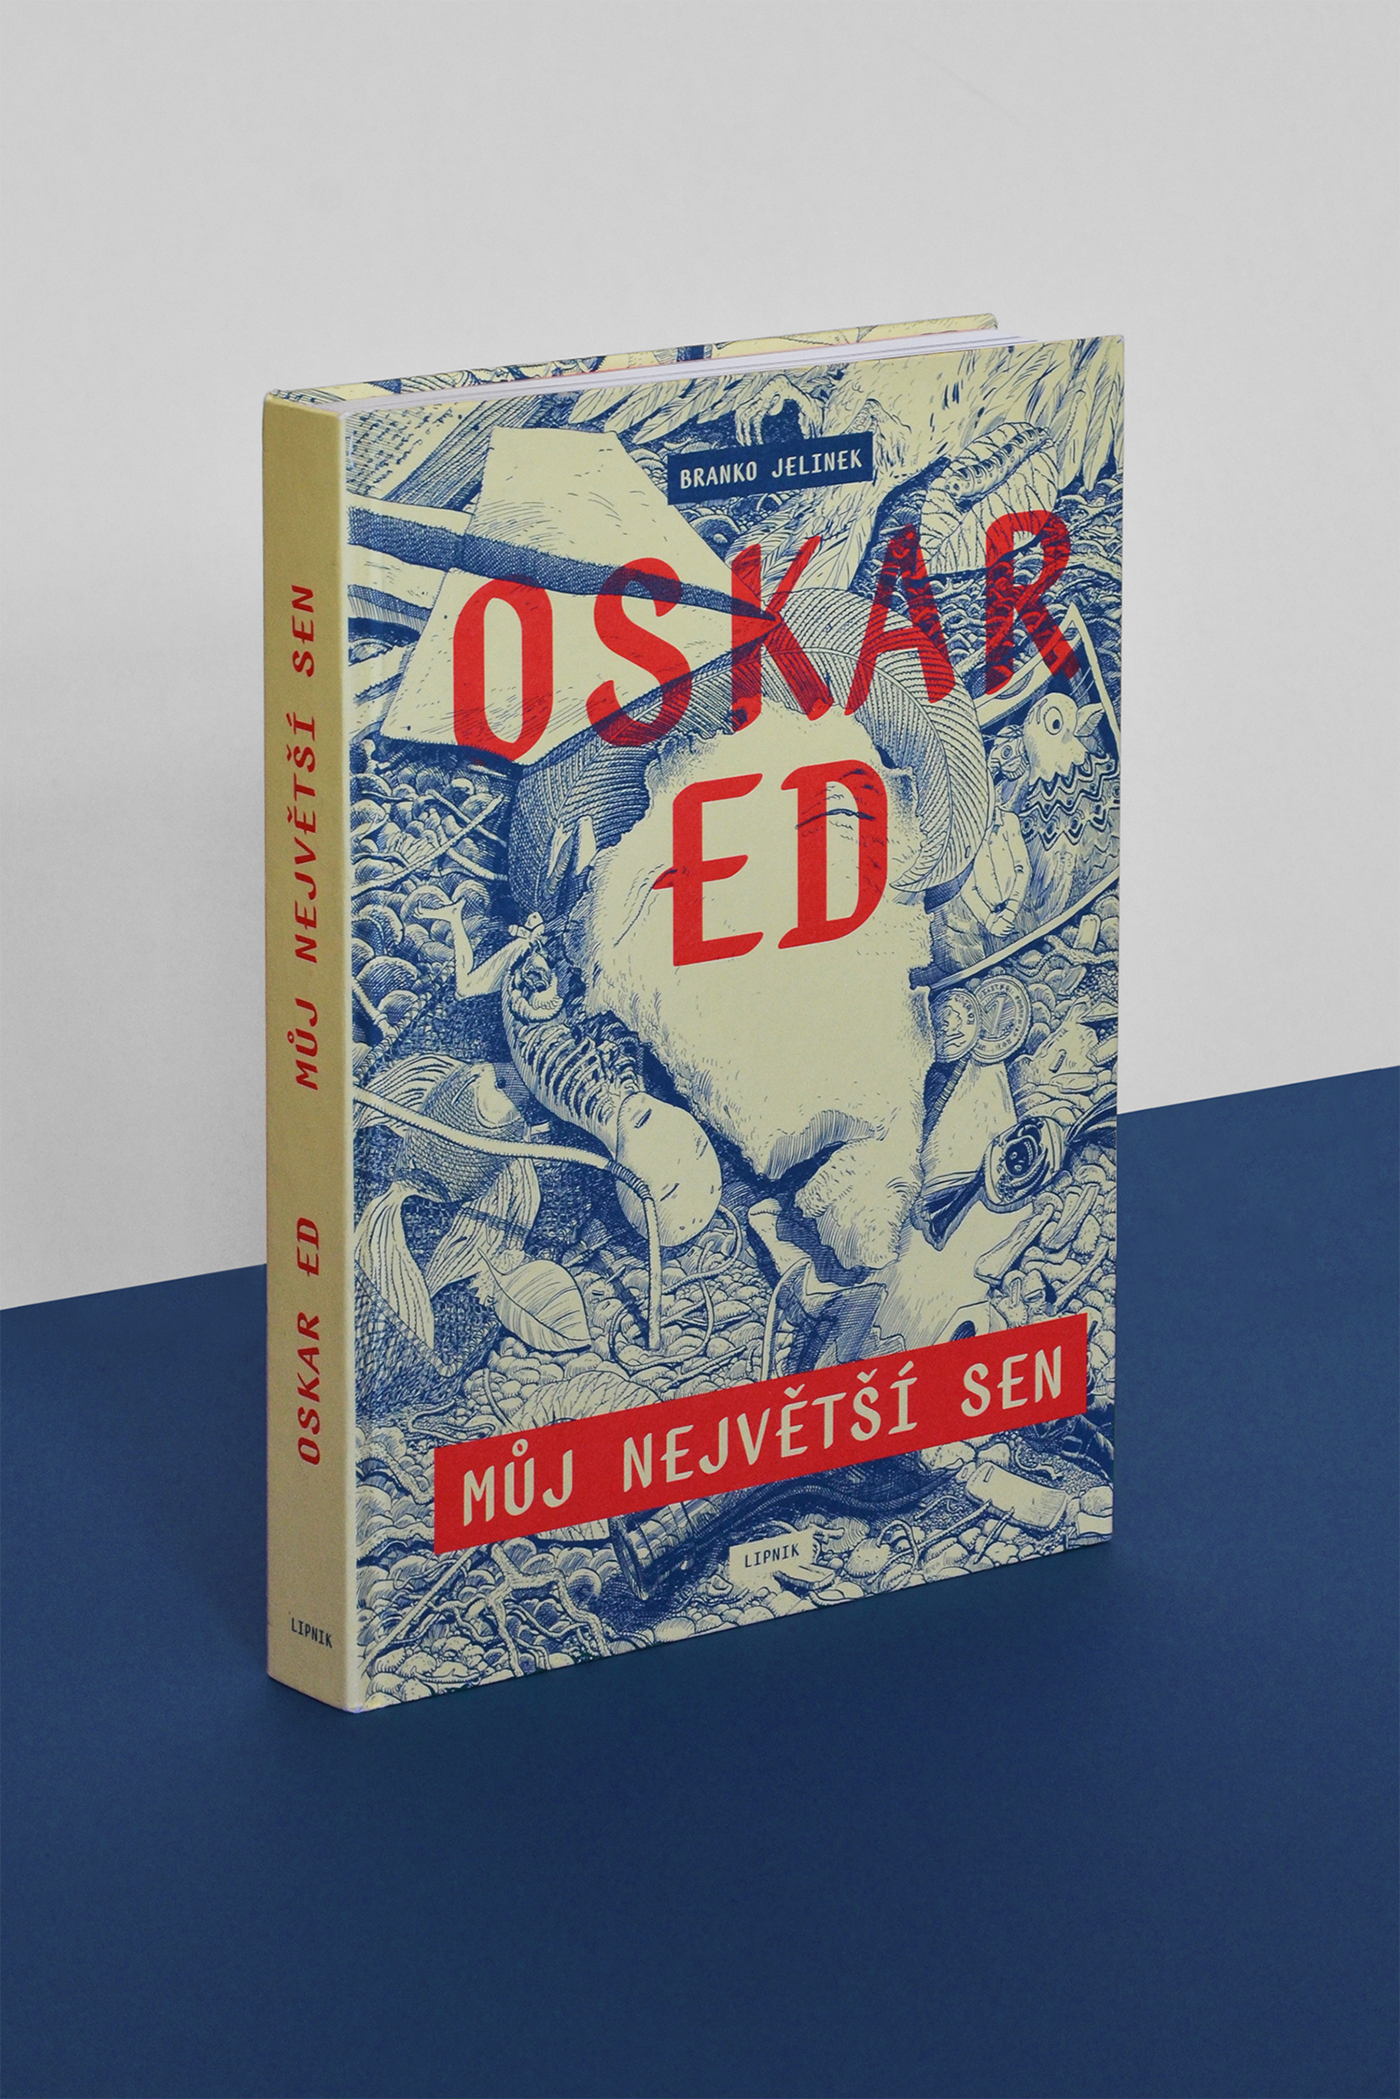 oskar ed komiks Czech lipnik branko jelinek book book cover book design